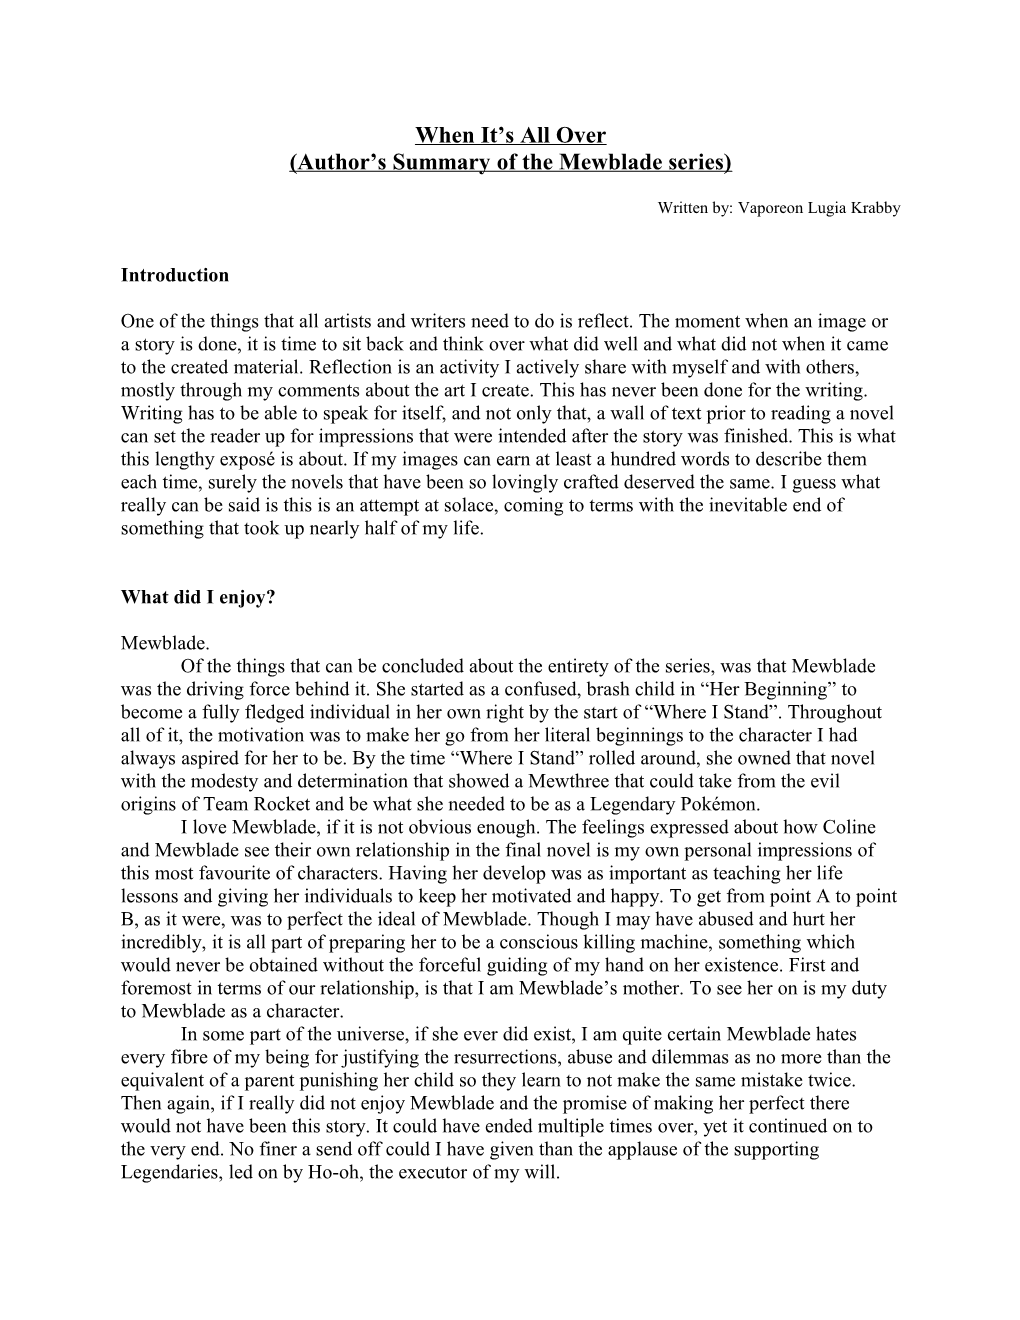 Author S Summary of the Mewblade Series